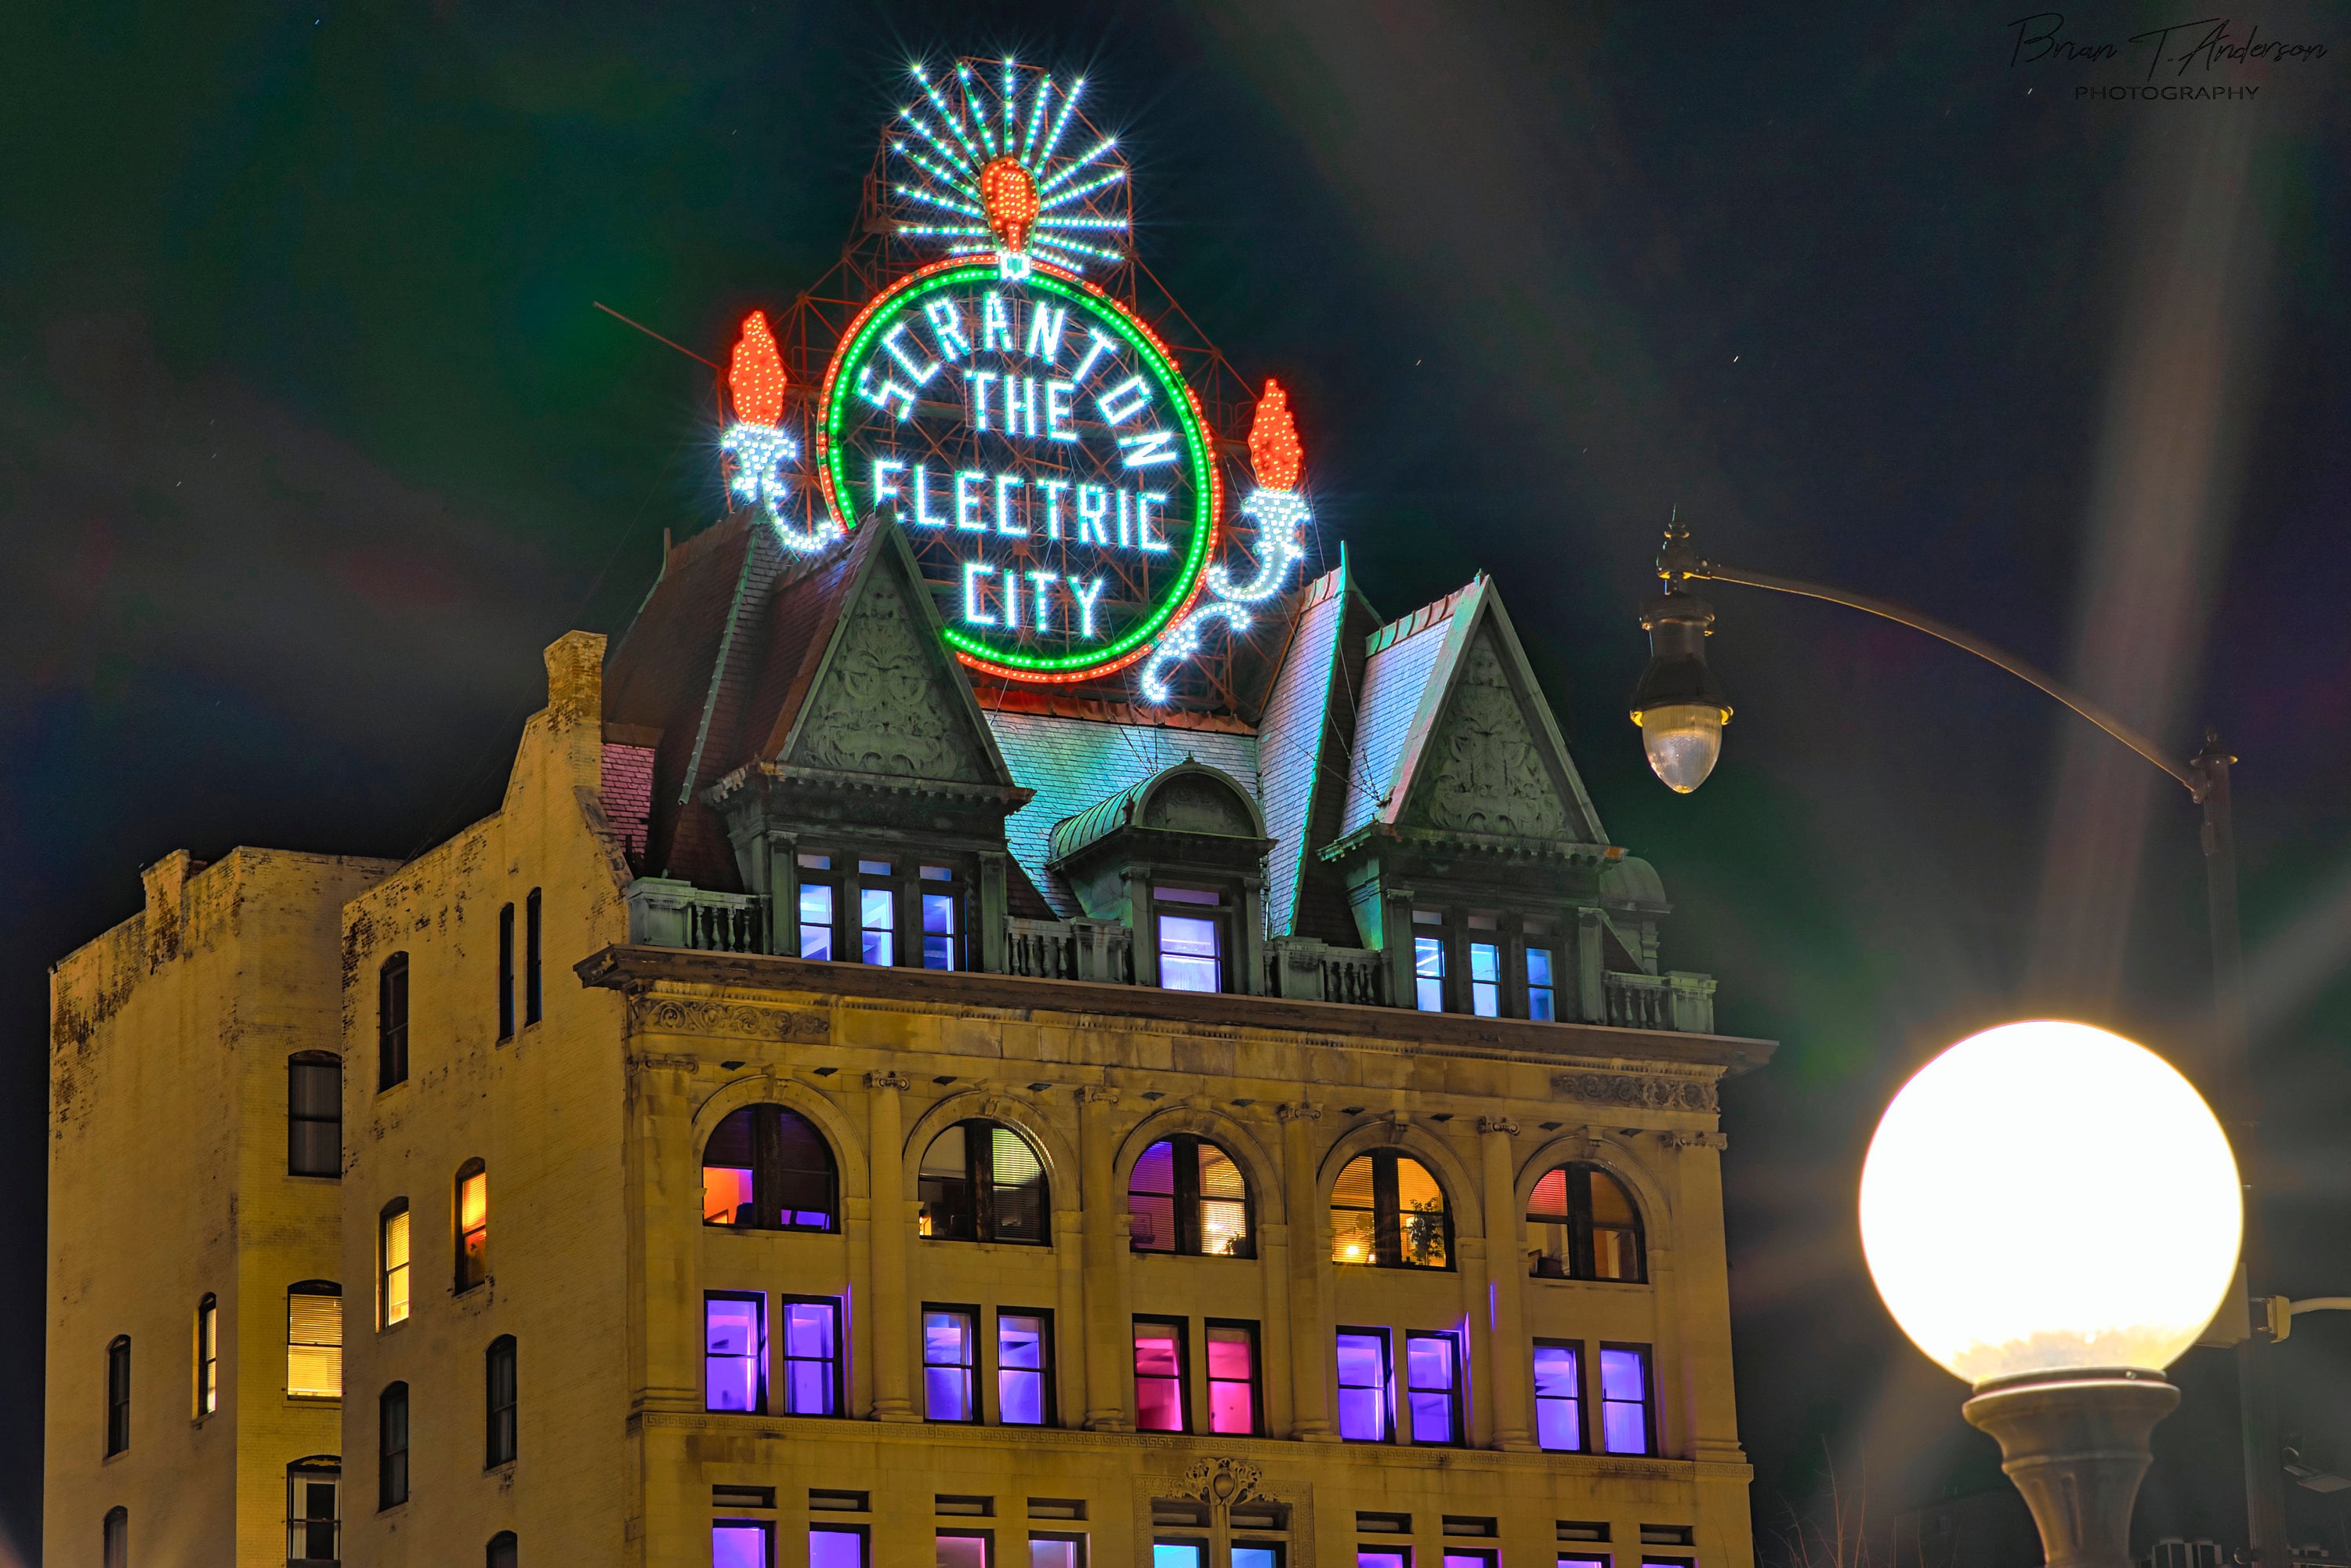 The Electric City Sign in Scranton Pa